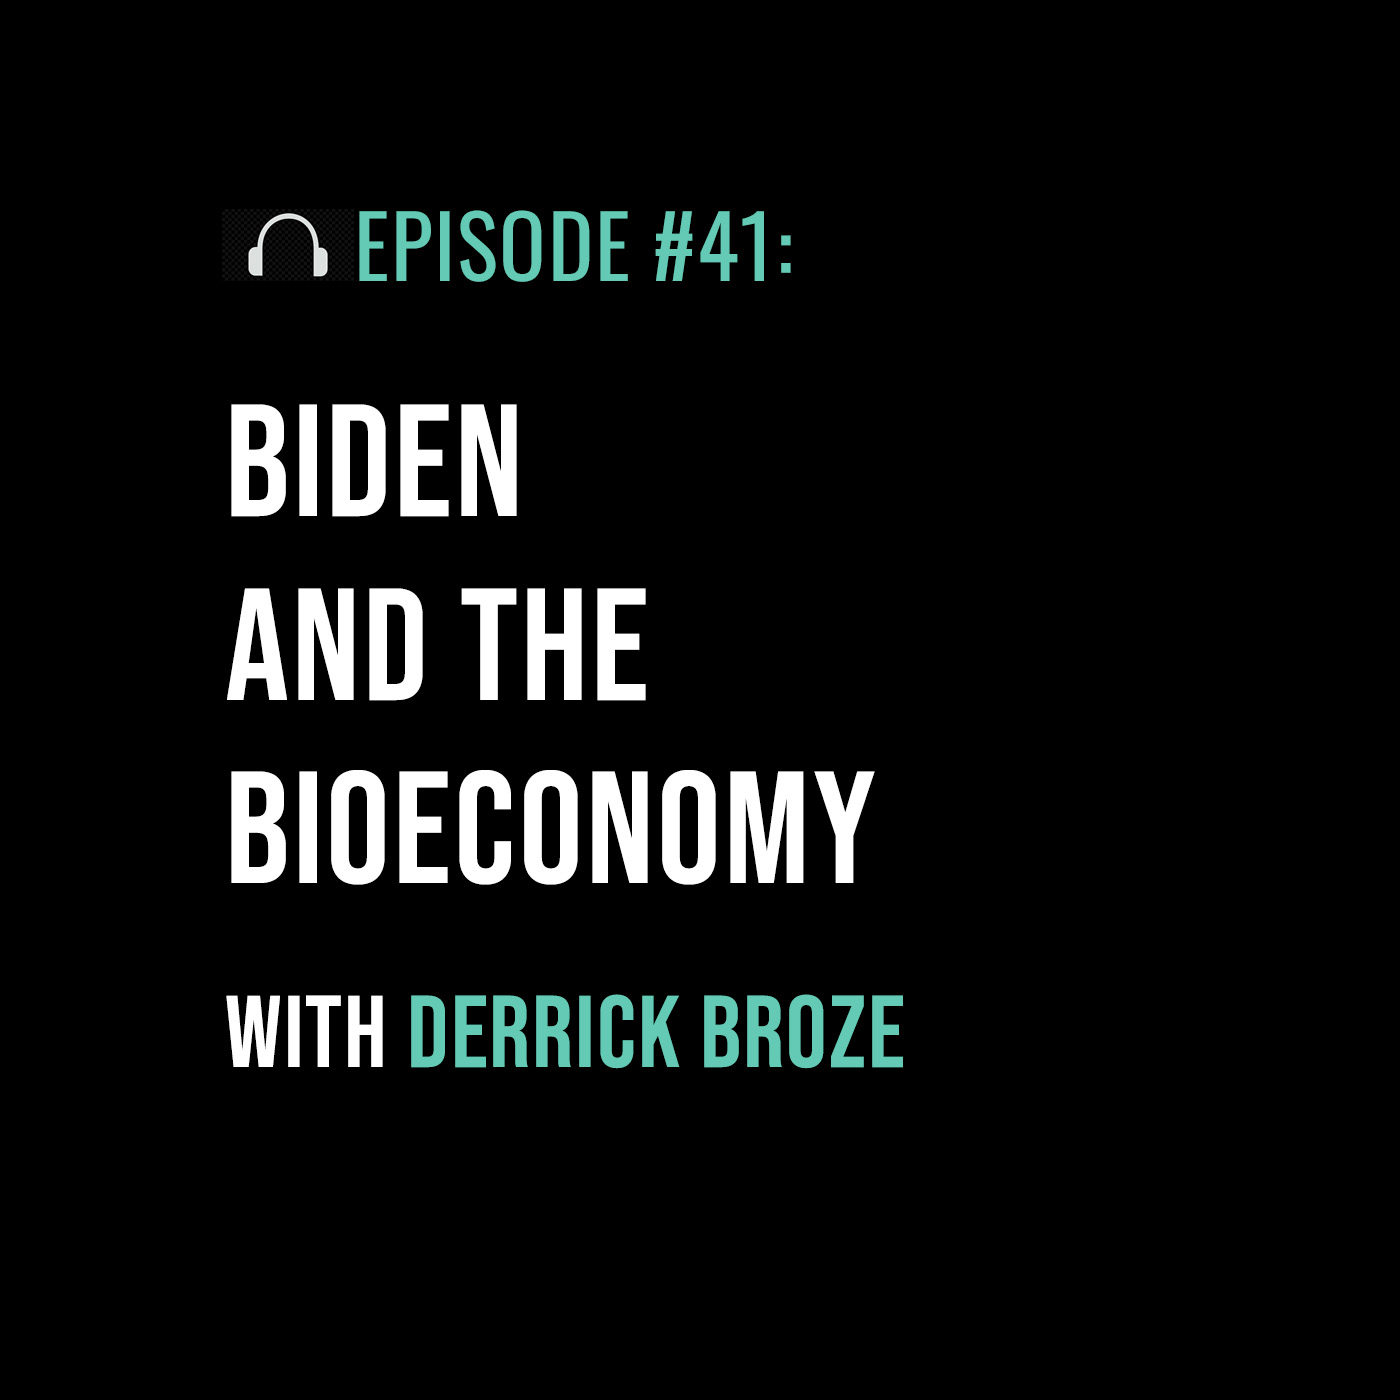 Biden and the Bioeconomy with Derrick Broze